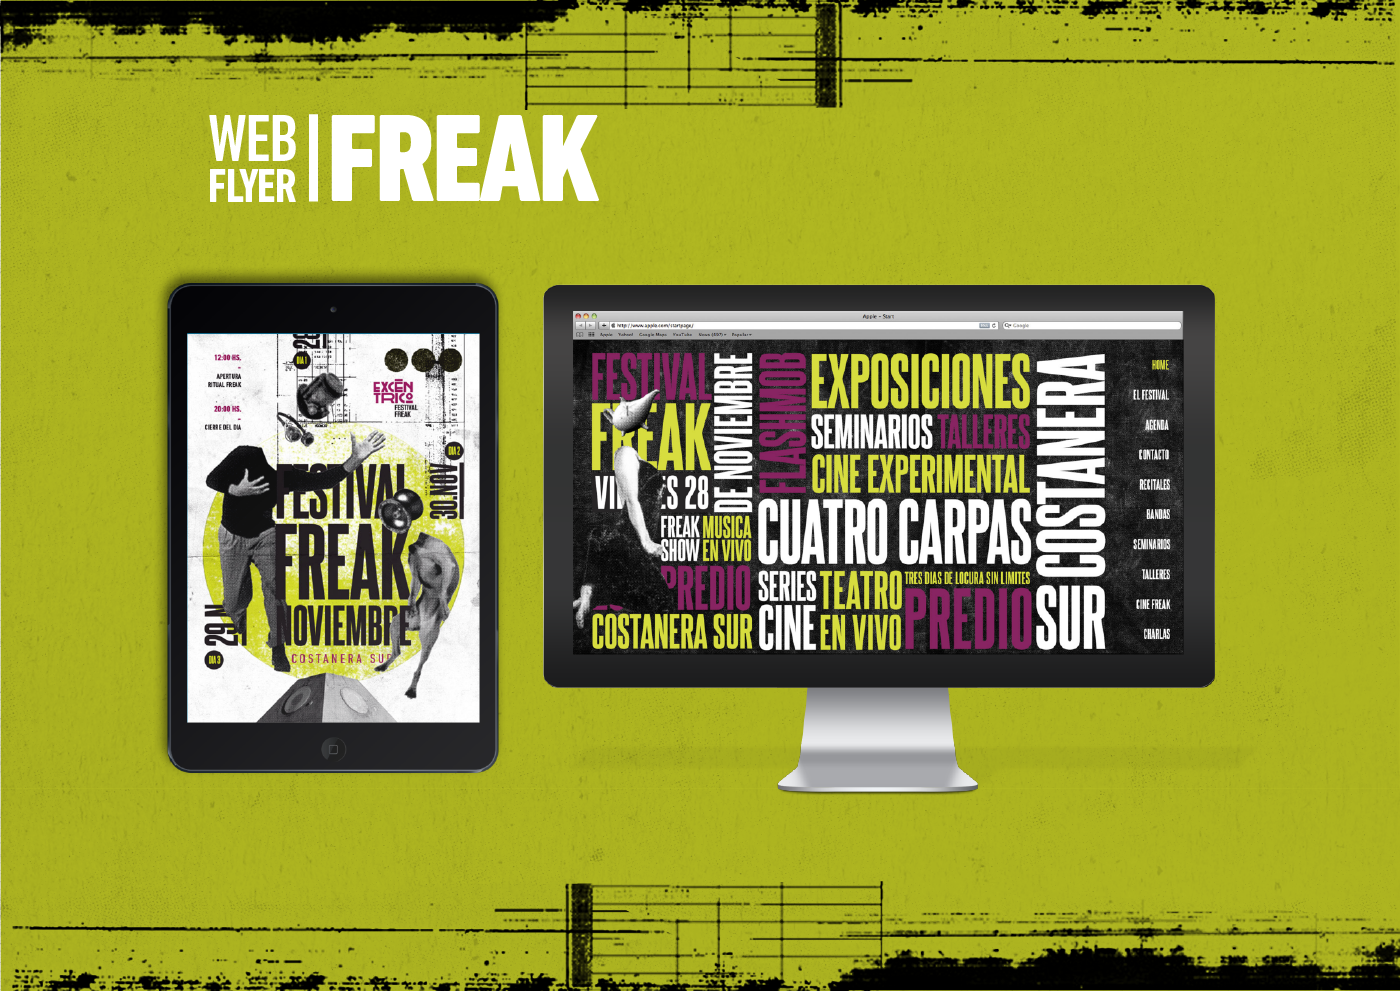 freak festival Gabriele excêntrico excêntrico elliebpink Ellie bpink grunge diseño gráfico festival freak Web flyer afiche institucional programatico